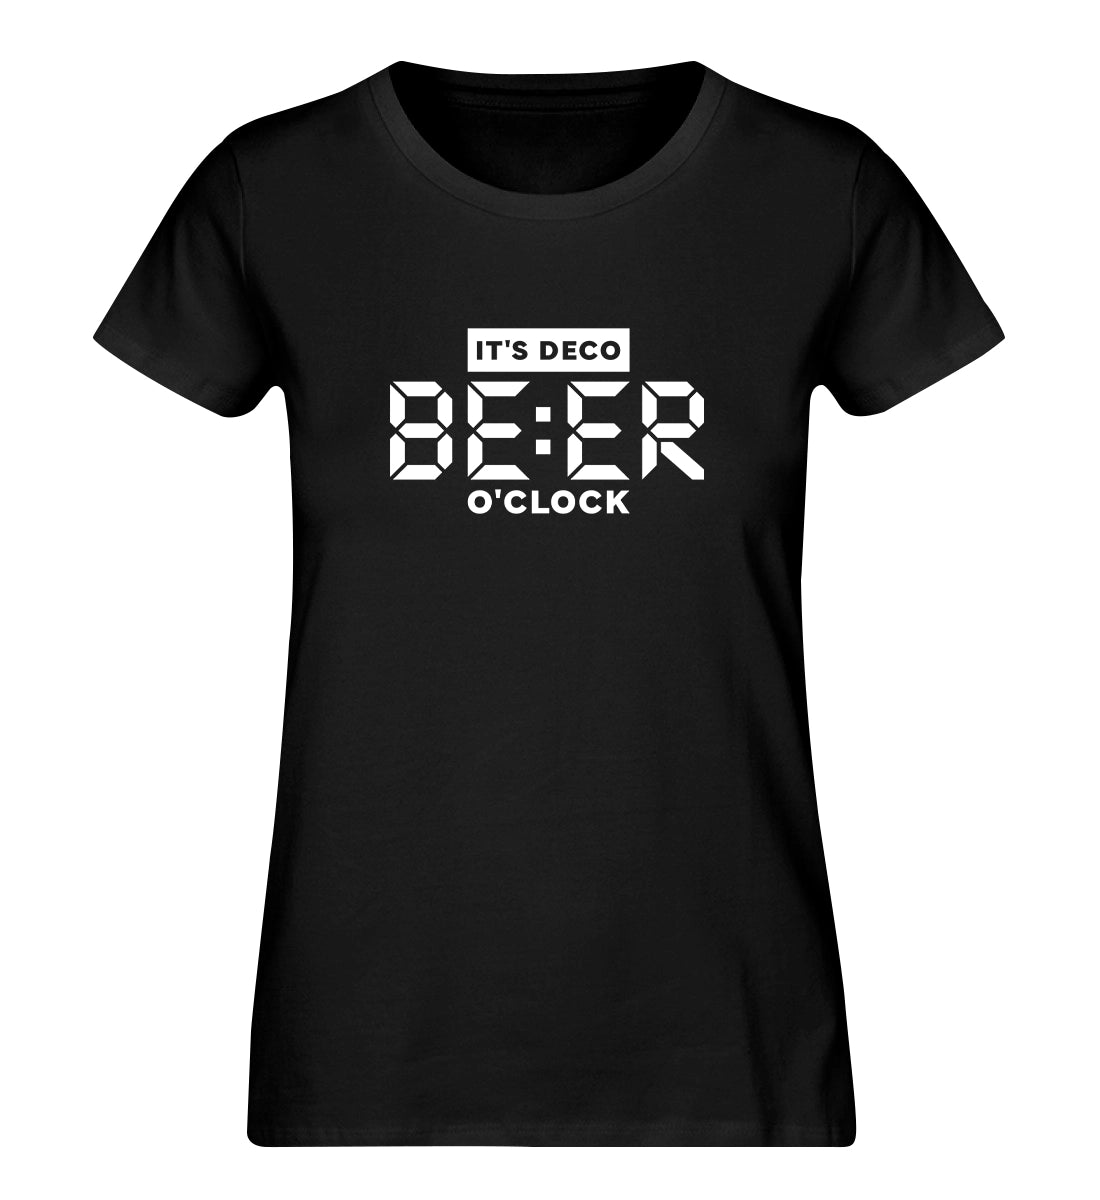 Deco Beer O'Clock - 100 % Bio Frauen T-Shirt